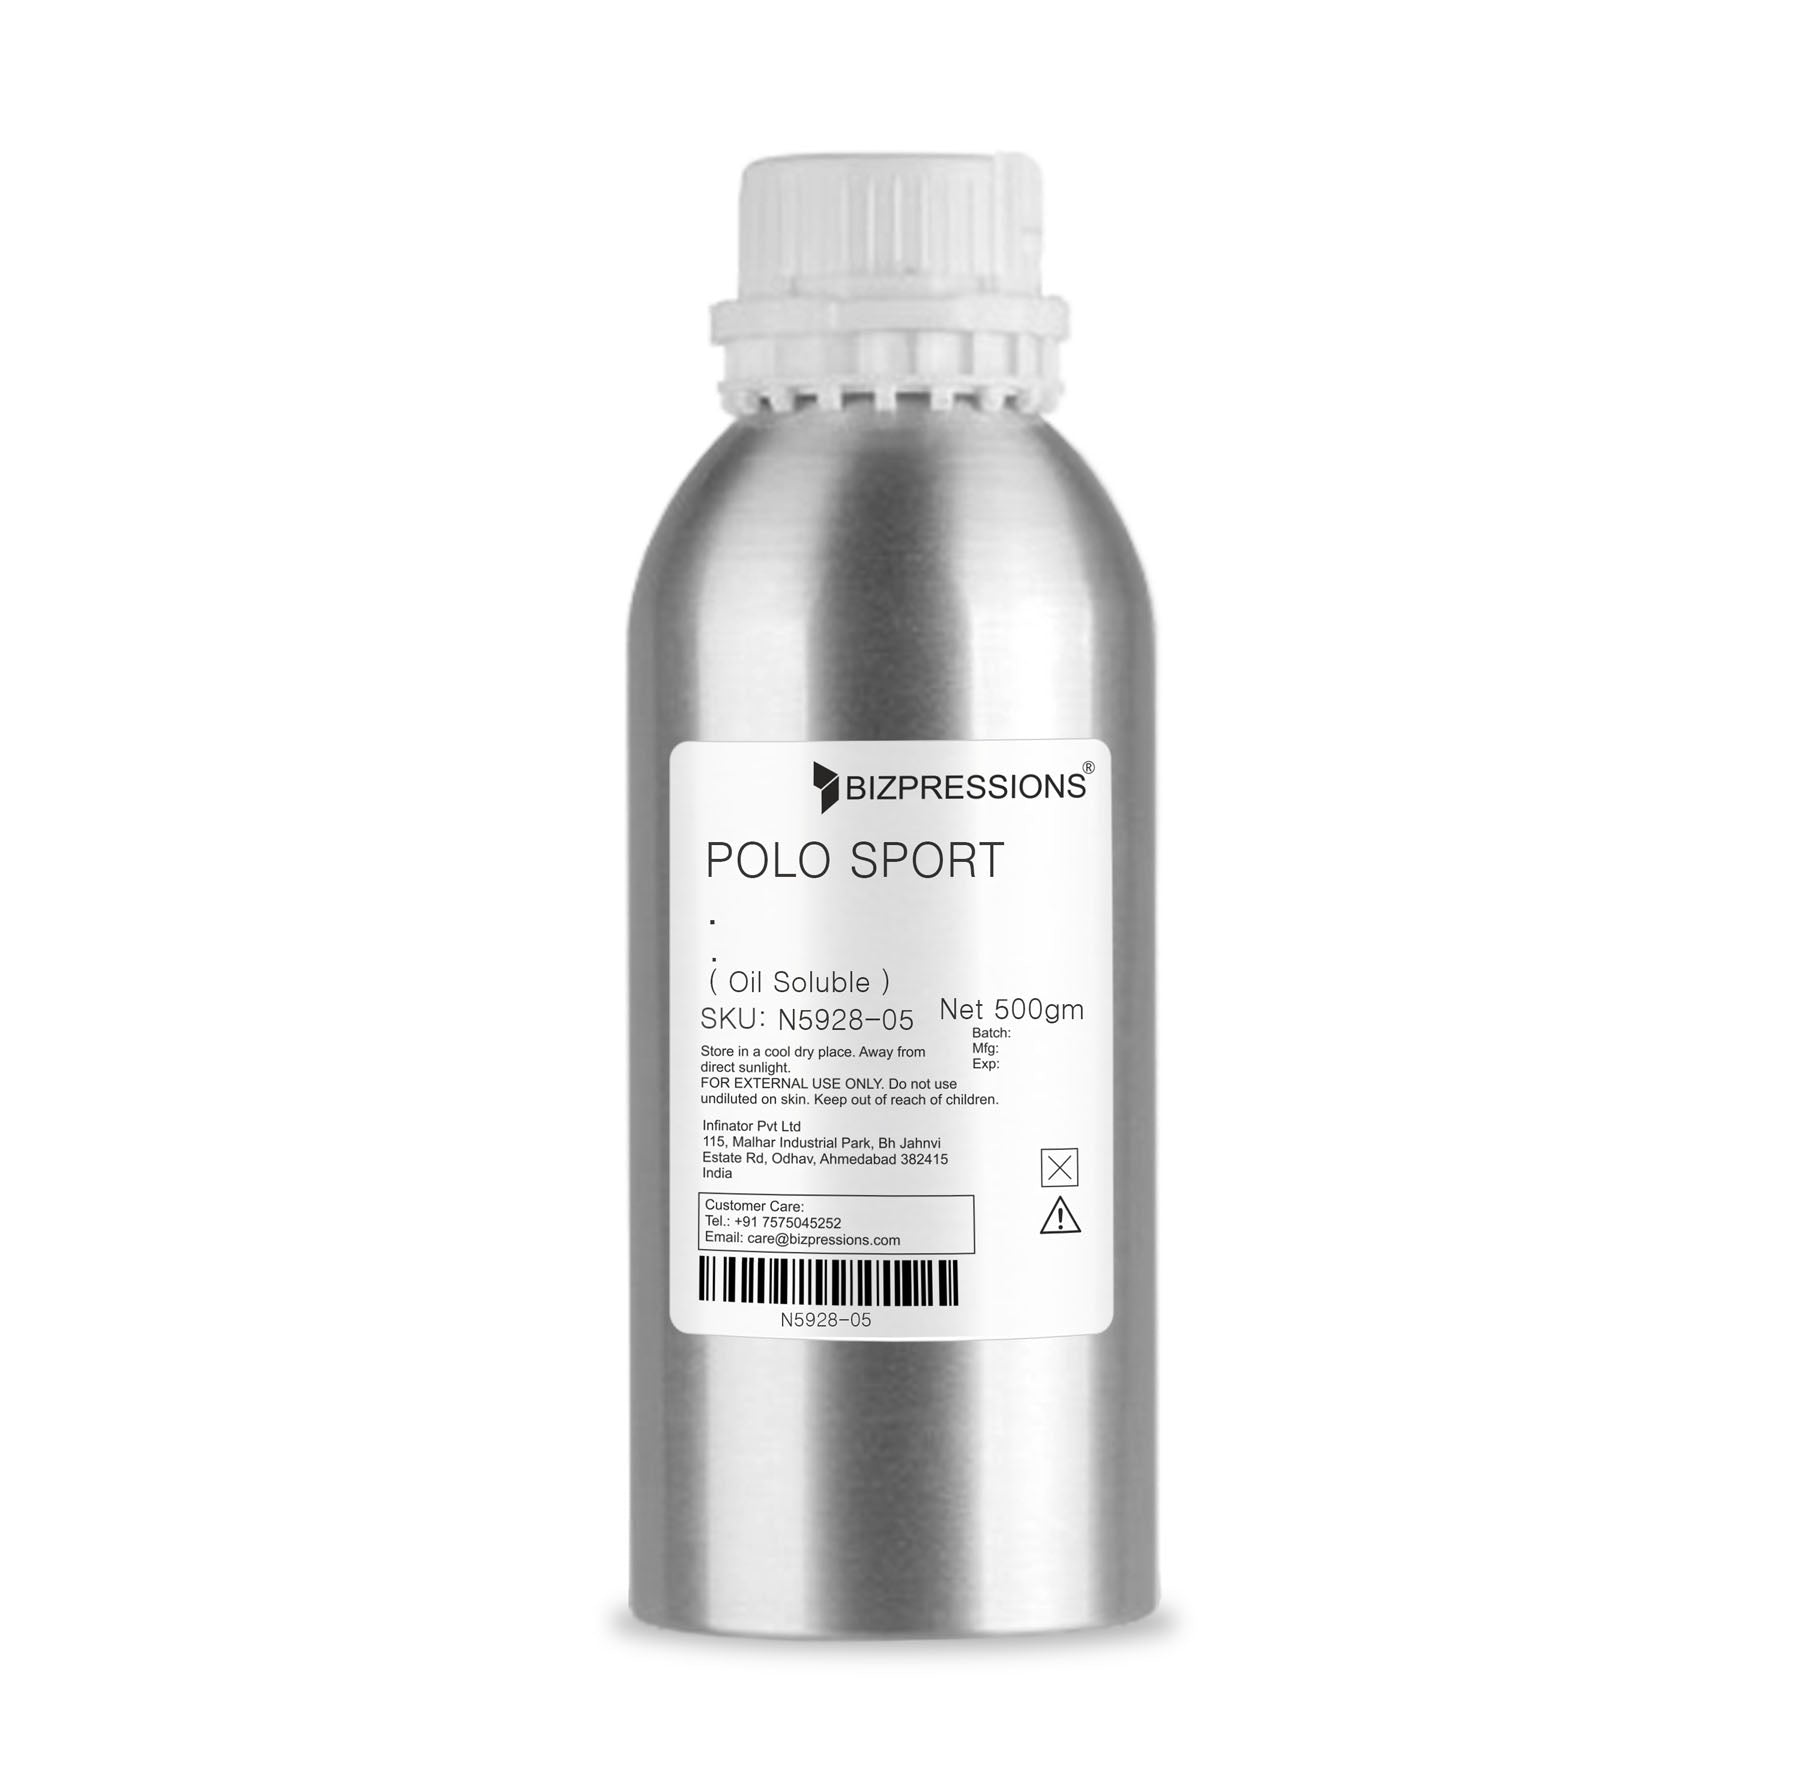 POLO SPORT - Fragrance ( Oil Soluble ) - 500 gm